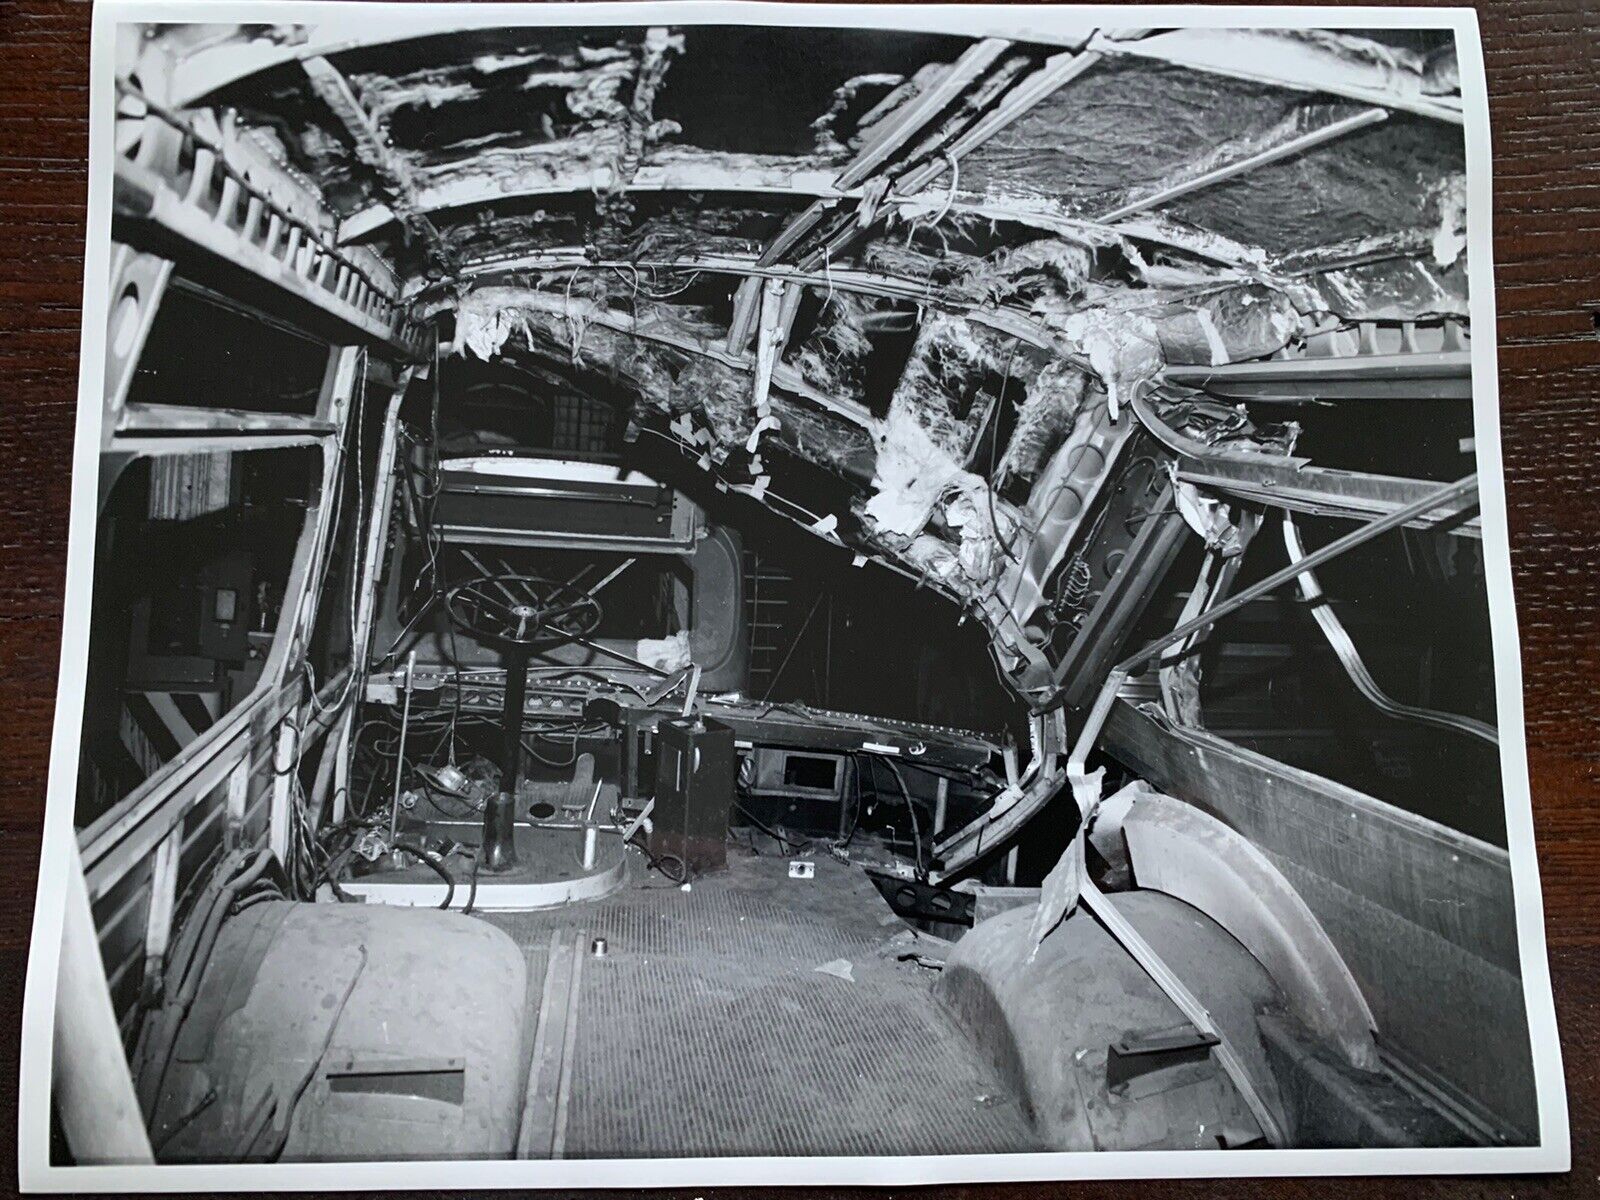 8X10 NY NYC SURFACE TRANSIT BUS B&W 1976 DAMAGED NEW YORK CITY ACCIDENT DEMOLISH